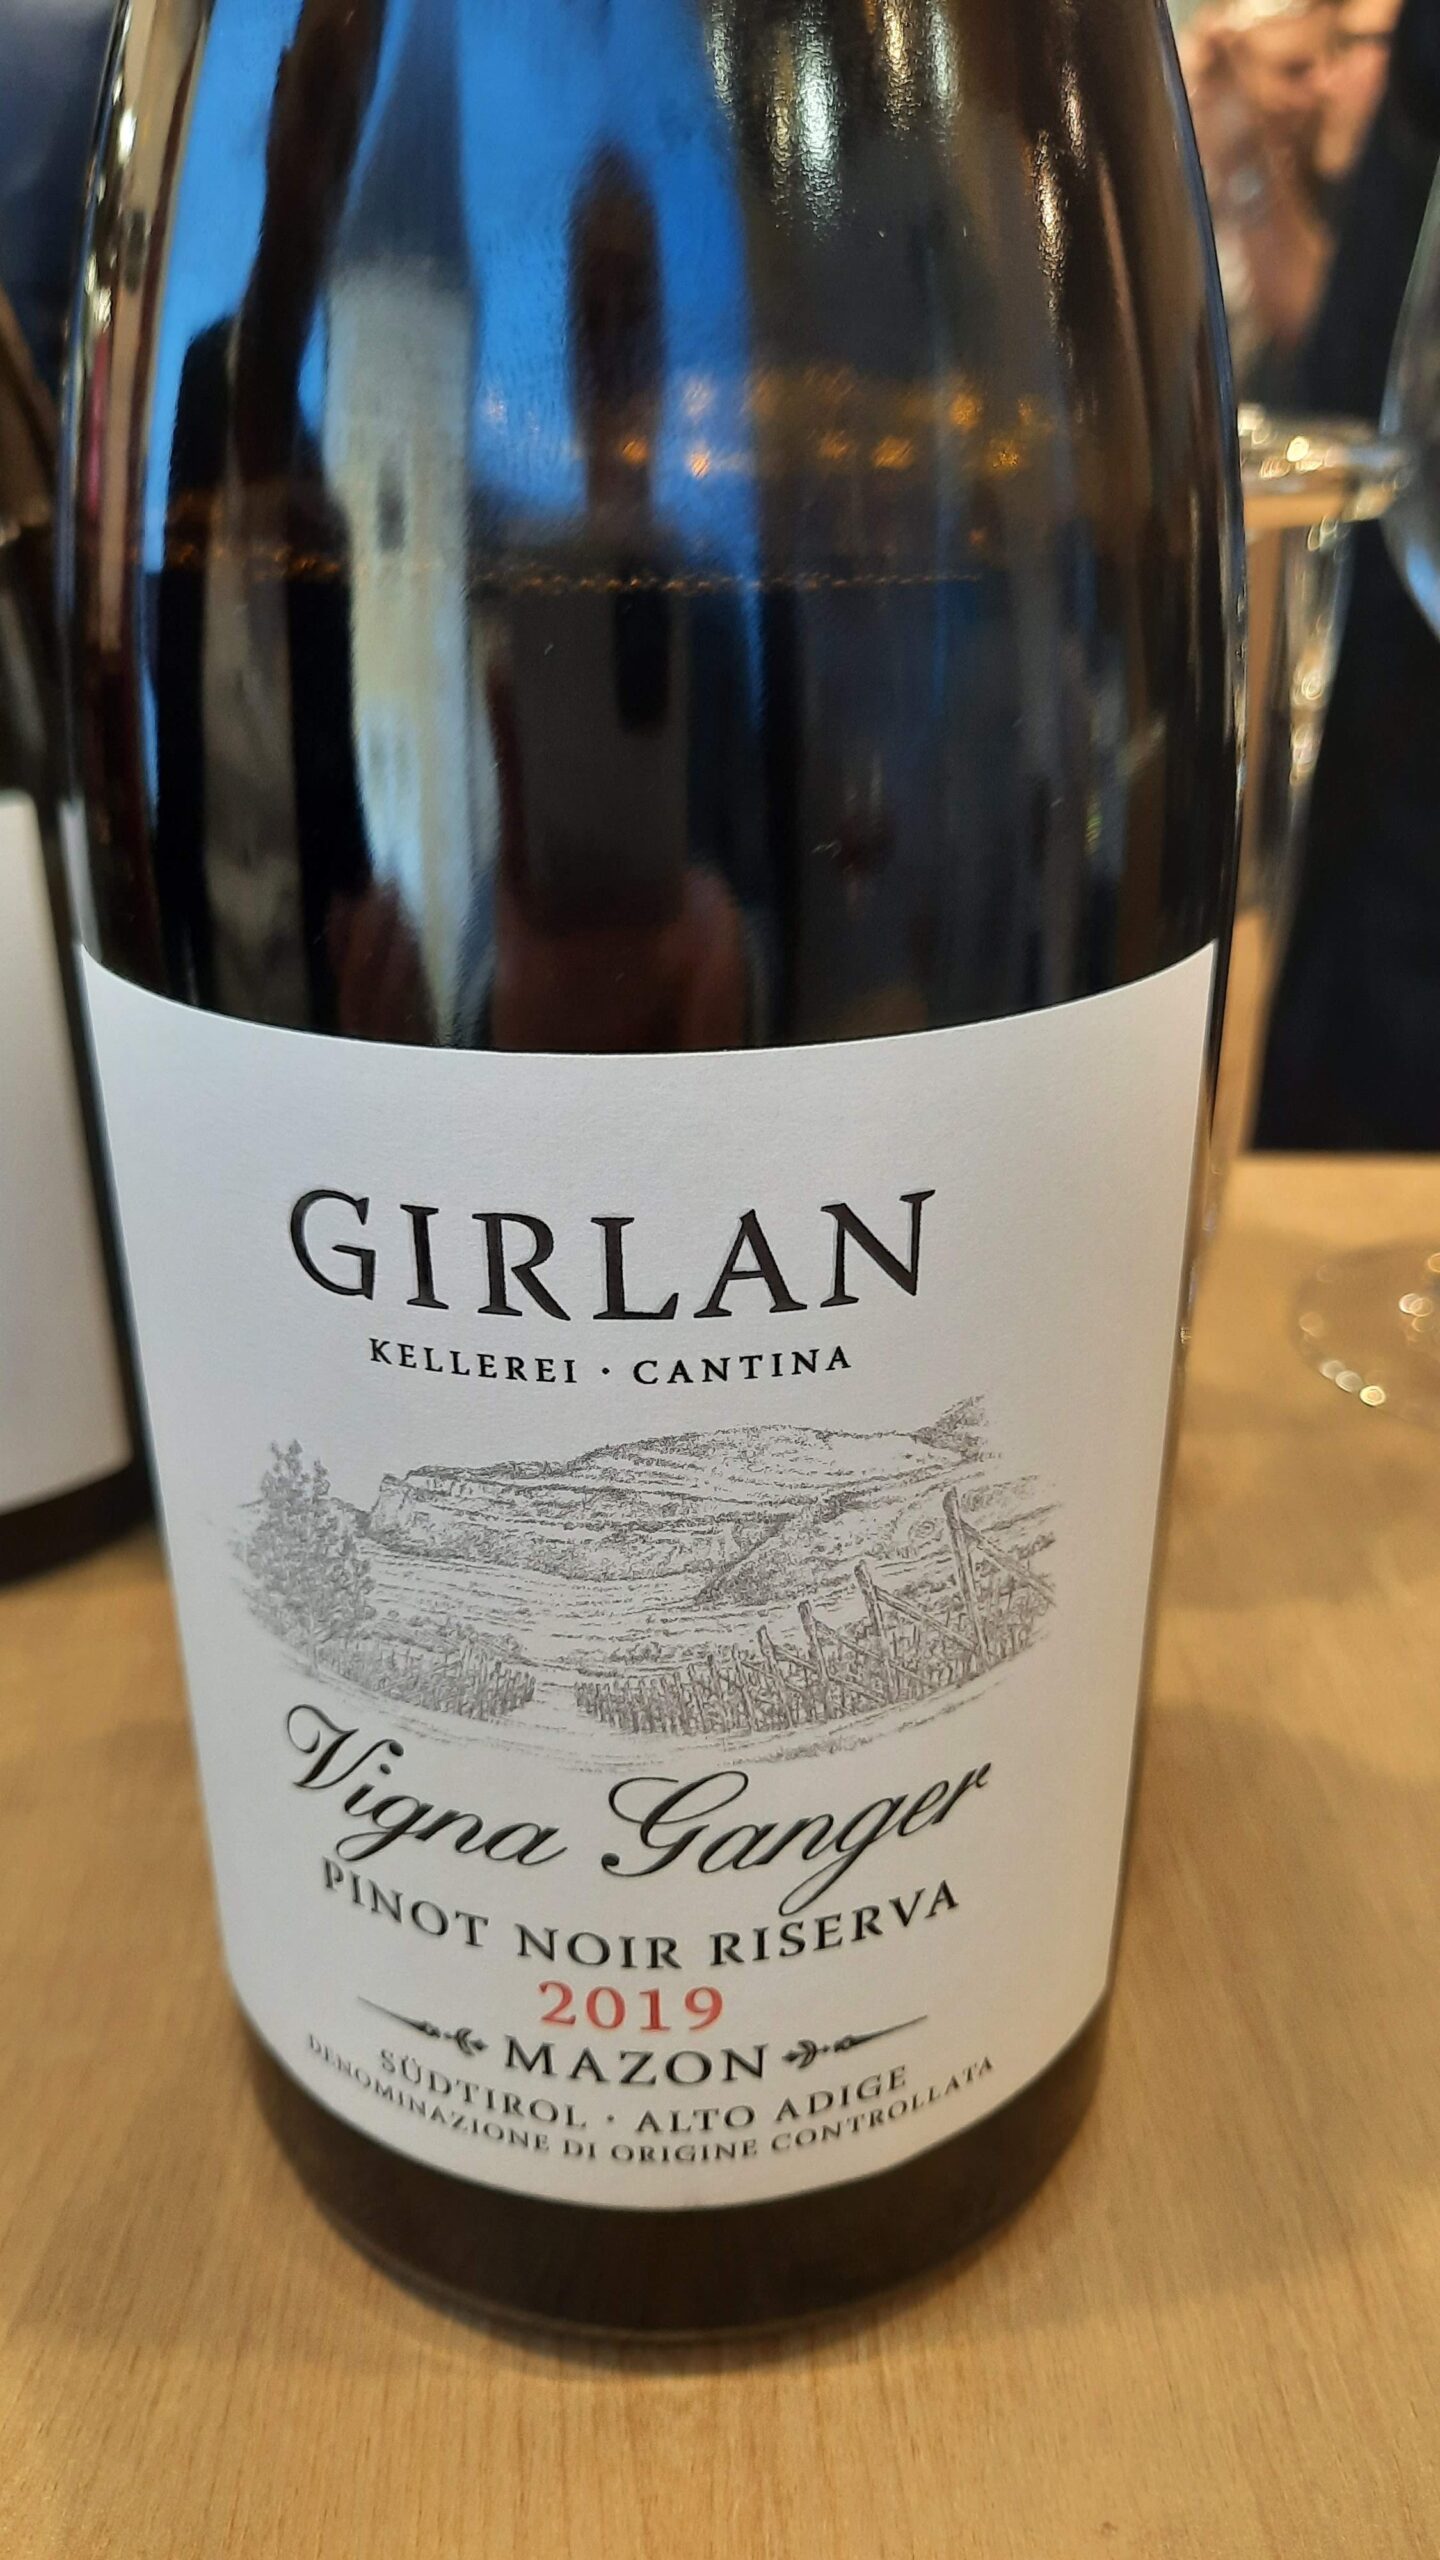 Vigna Ganger Pinot Noir Riserva Alto Adige Doc 2019 Cantina Girlan, foto di Adriano Guerri